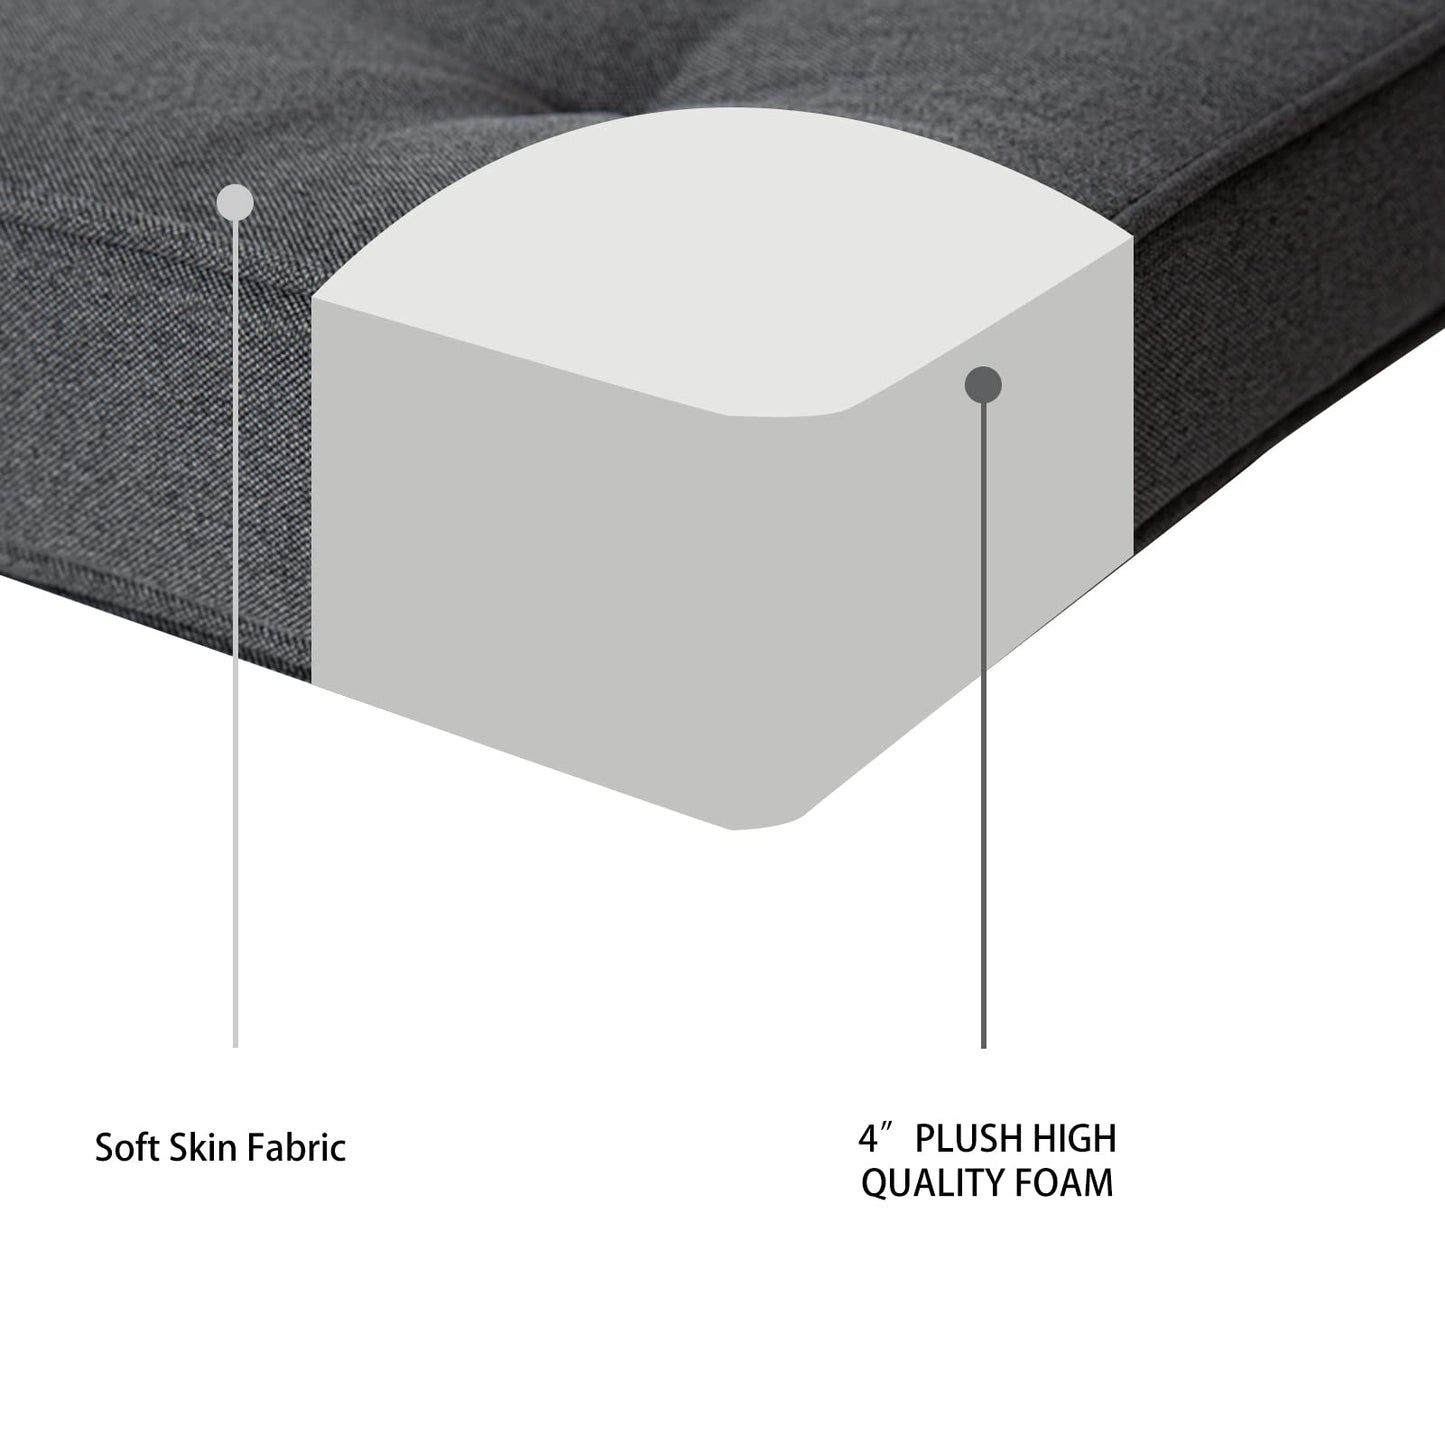 MAXYOYO Portable Folding Mattress, single futon mattress, Tri-fold Mattress with Memory Foam, Dark Gray